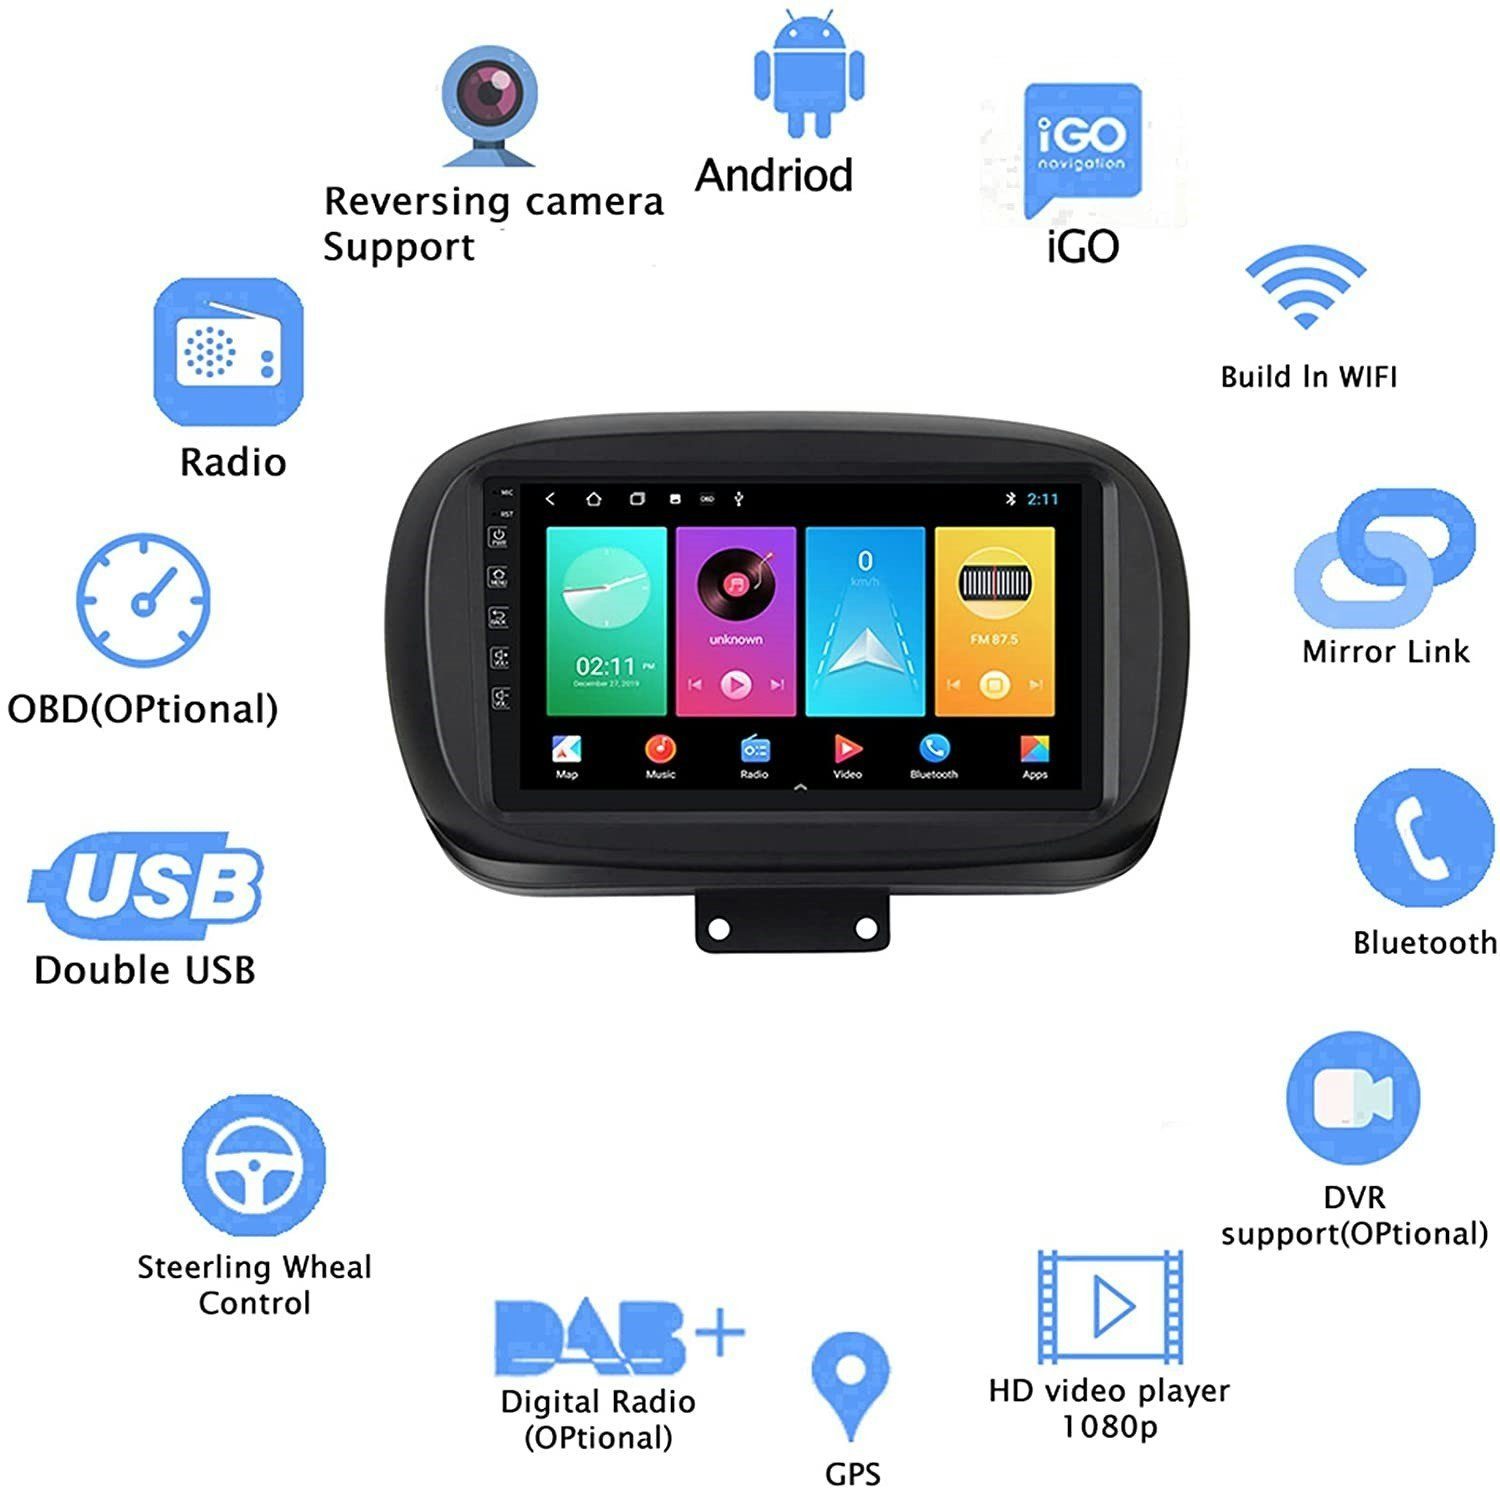 9 Android GPS Autoradio 2014-2019 11 zoll 500X GABITECH für FIAT Autoradio Navi